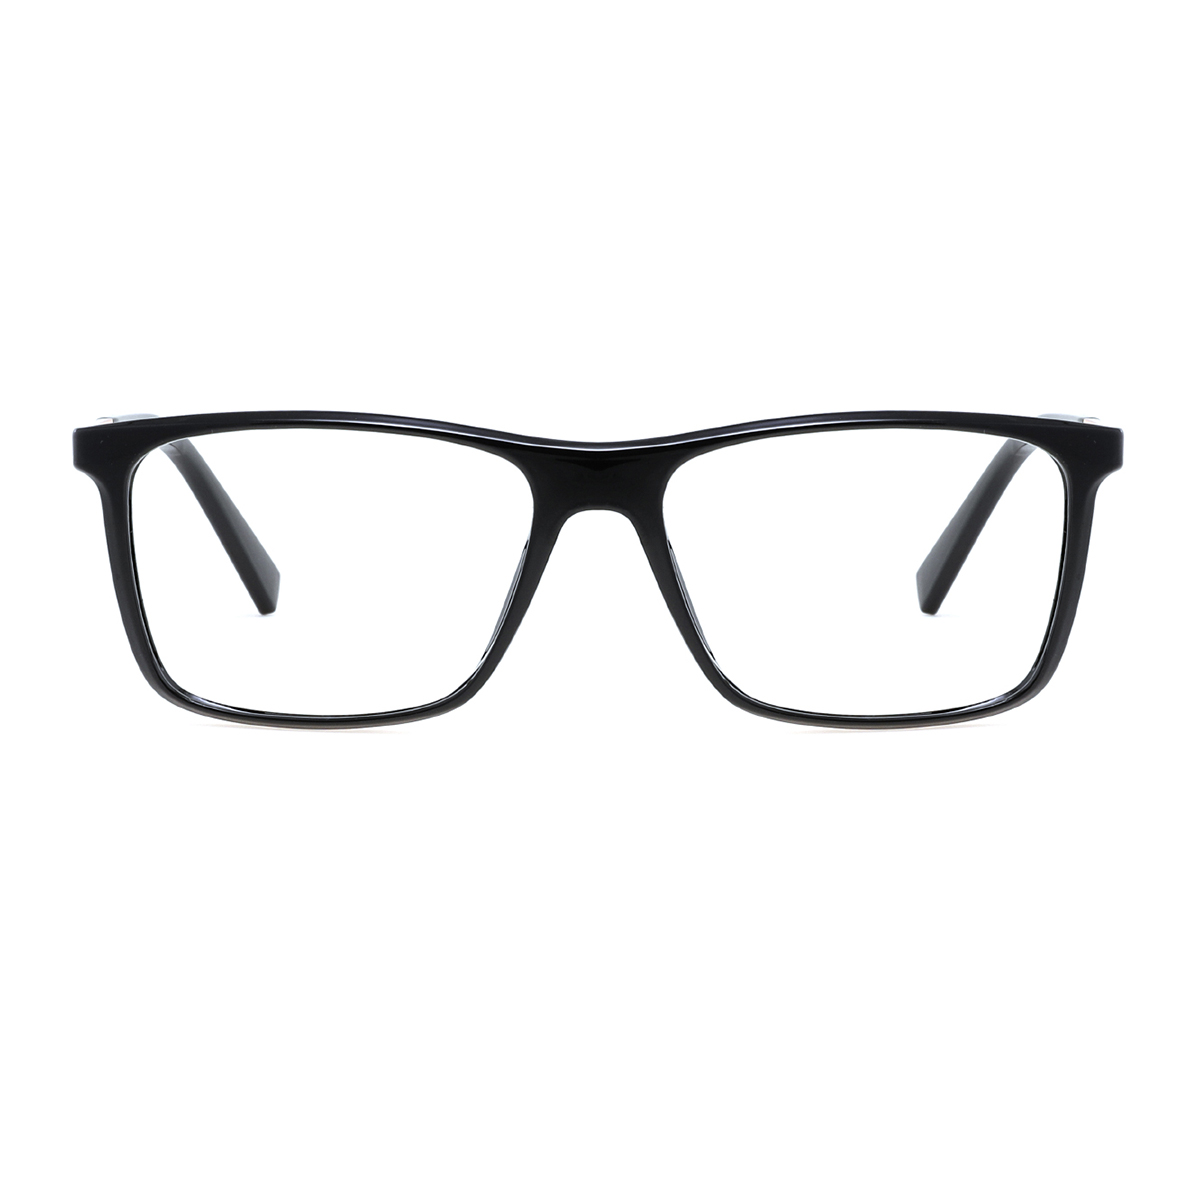 rectangle black-gold eyeglasses